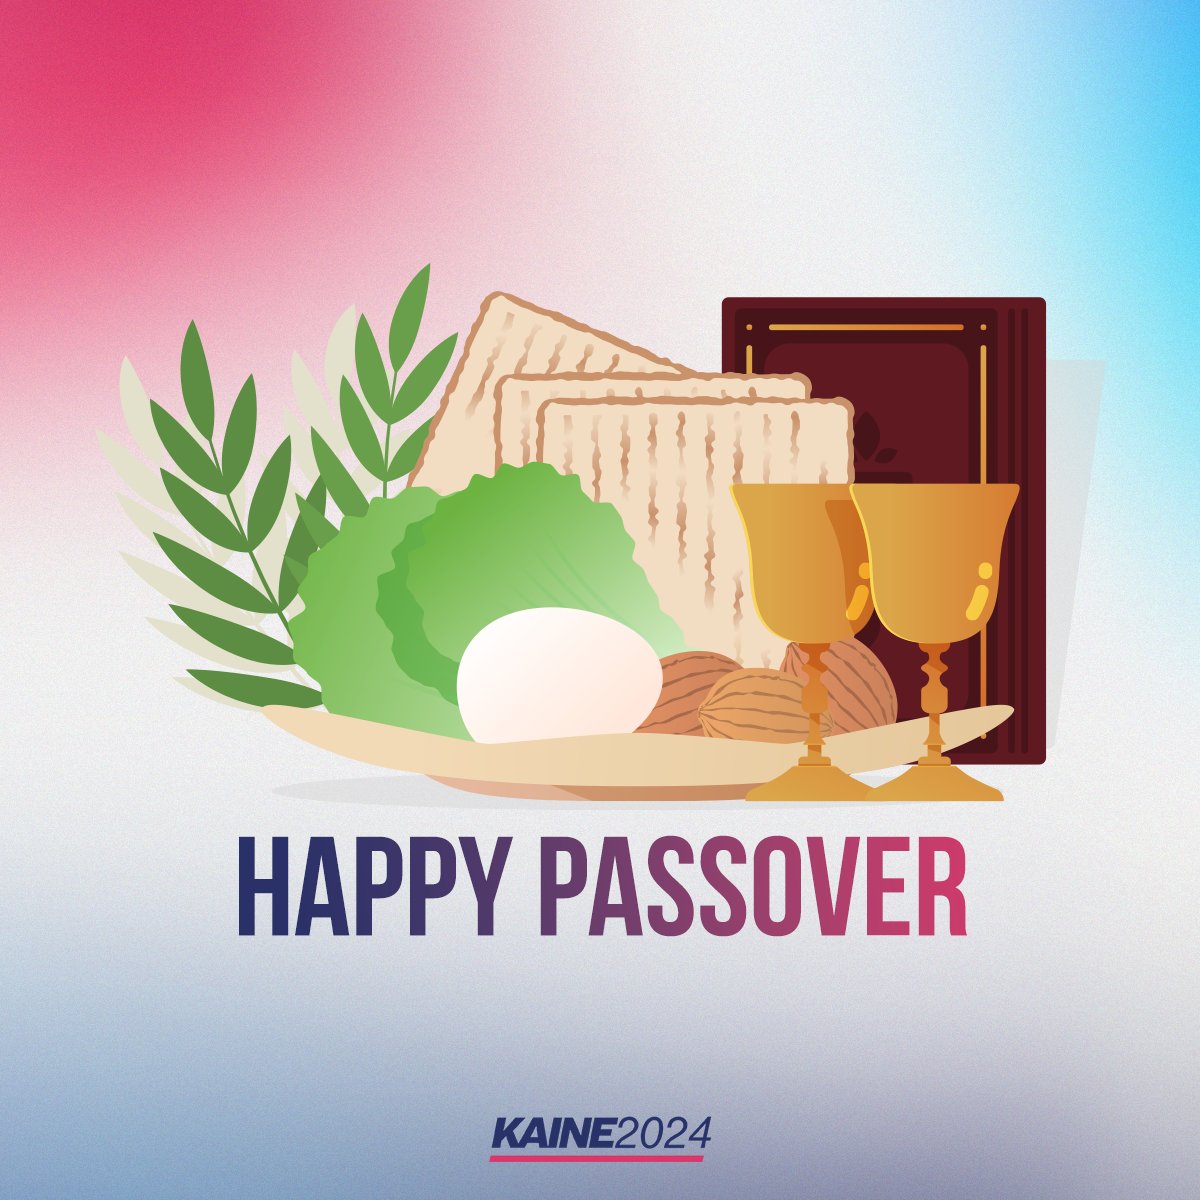 Wishing everyone who is celebrating tonight a happy Passover. Chag Sameach!